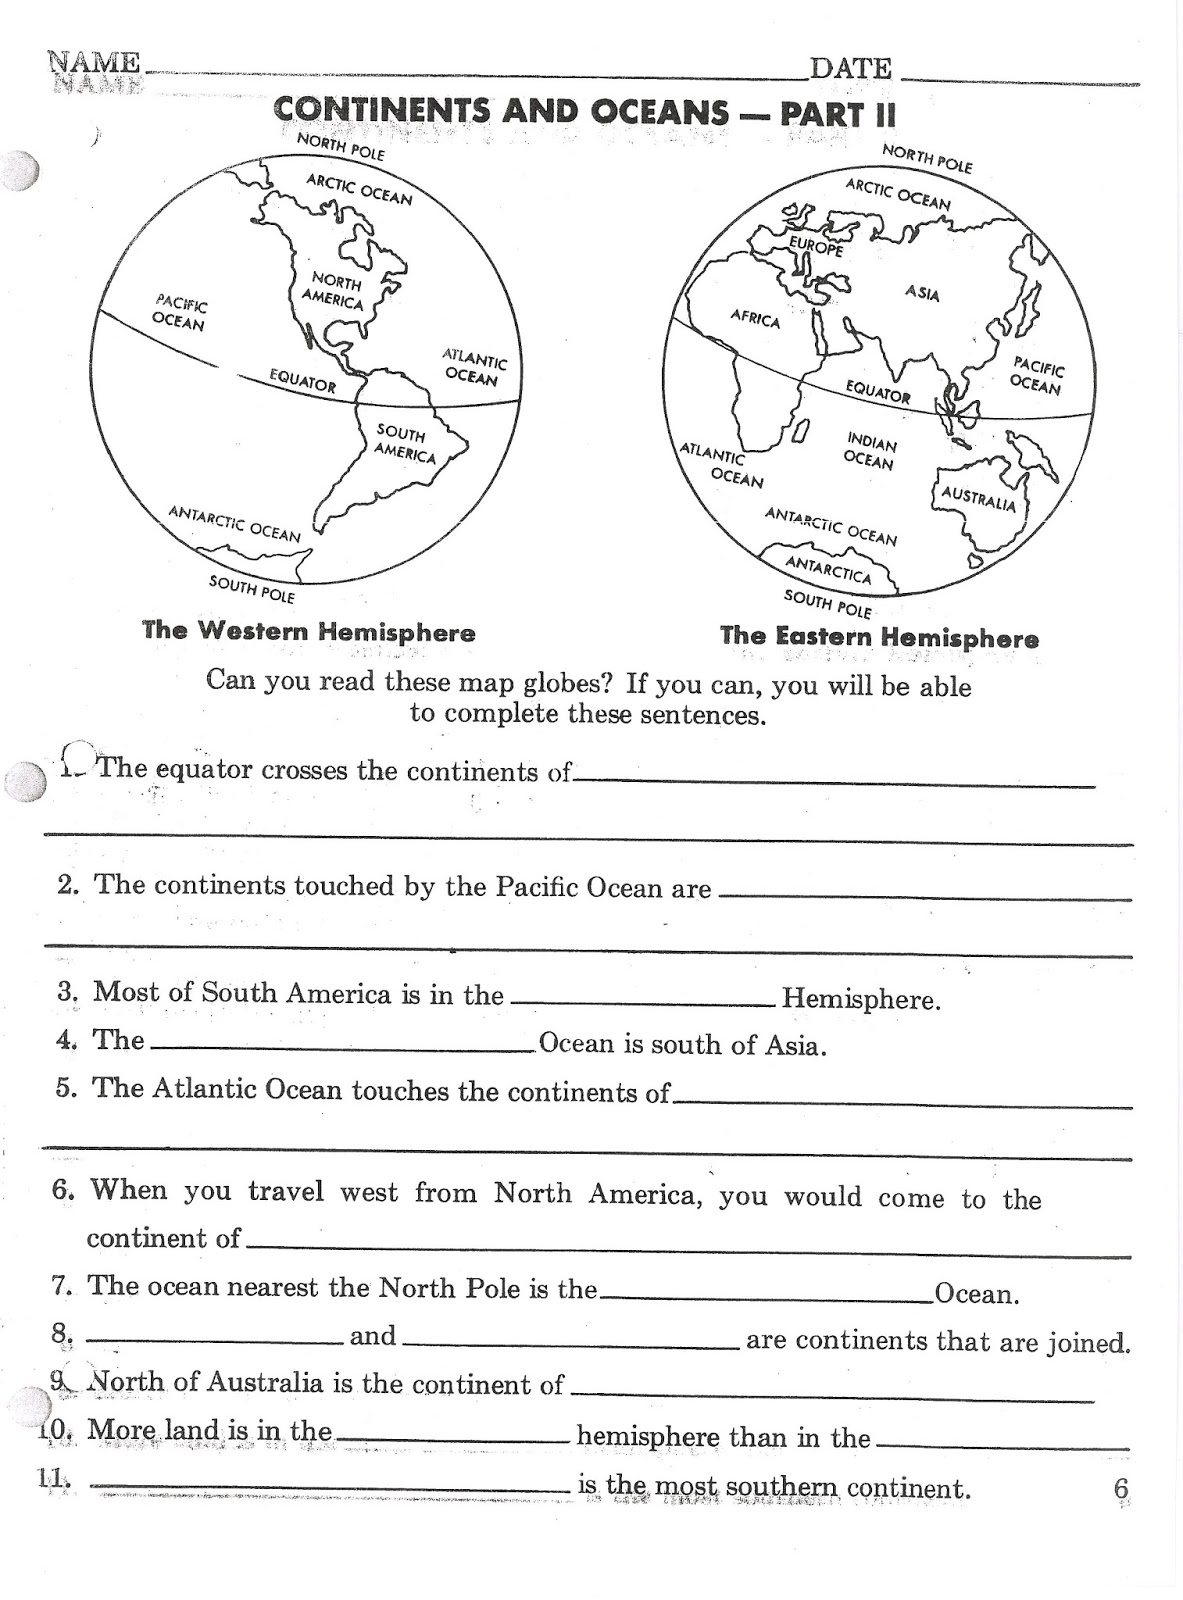 30 Free Printable 4th Grade Social Studies Worksheets Photos Images 